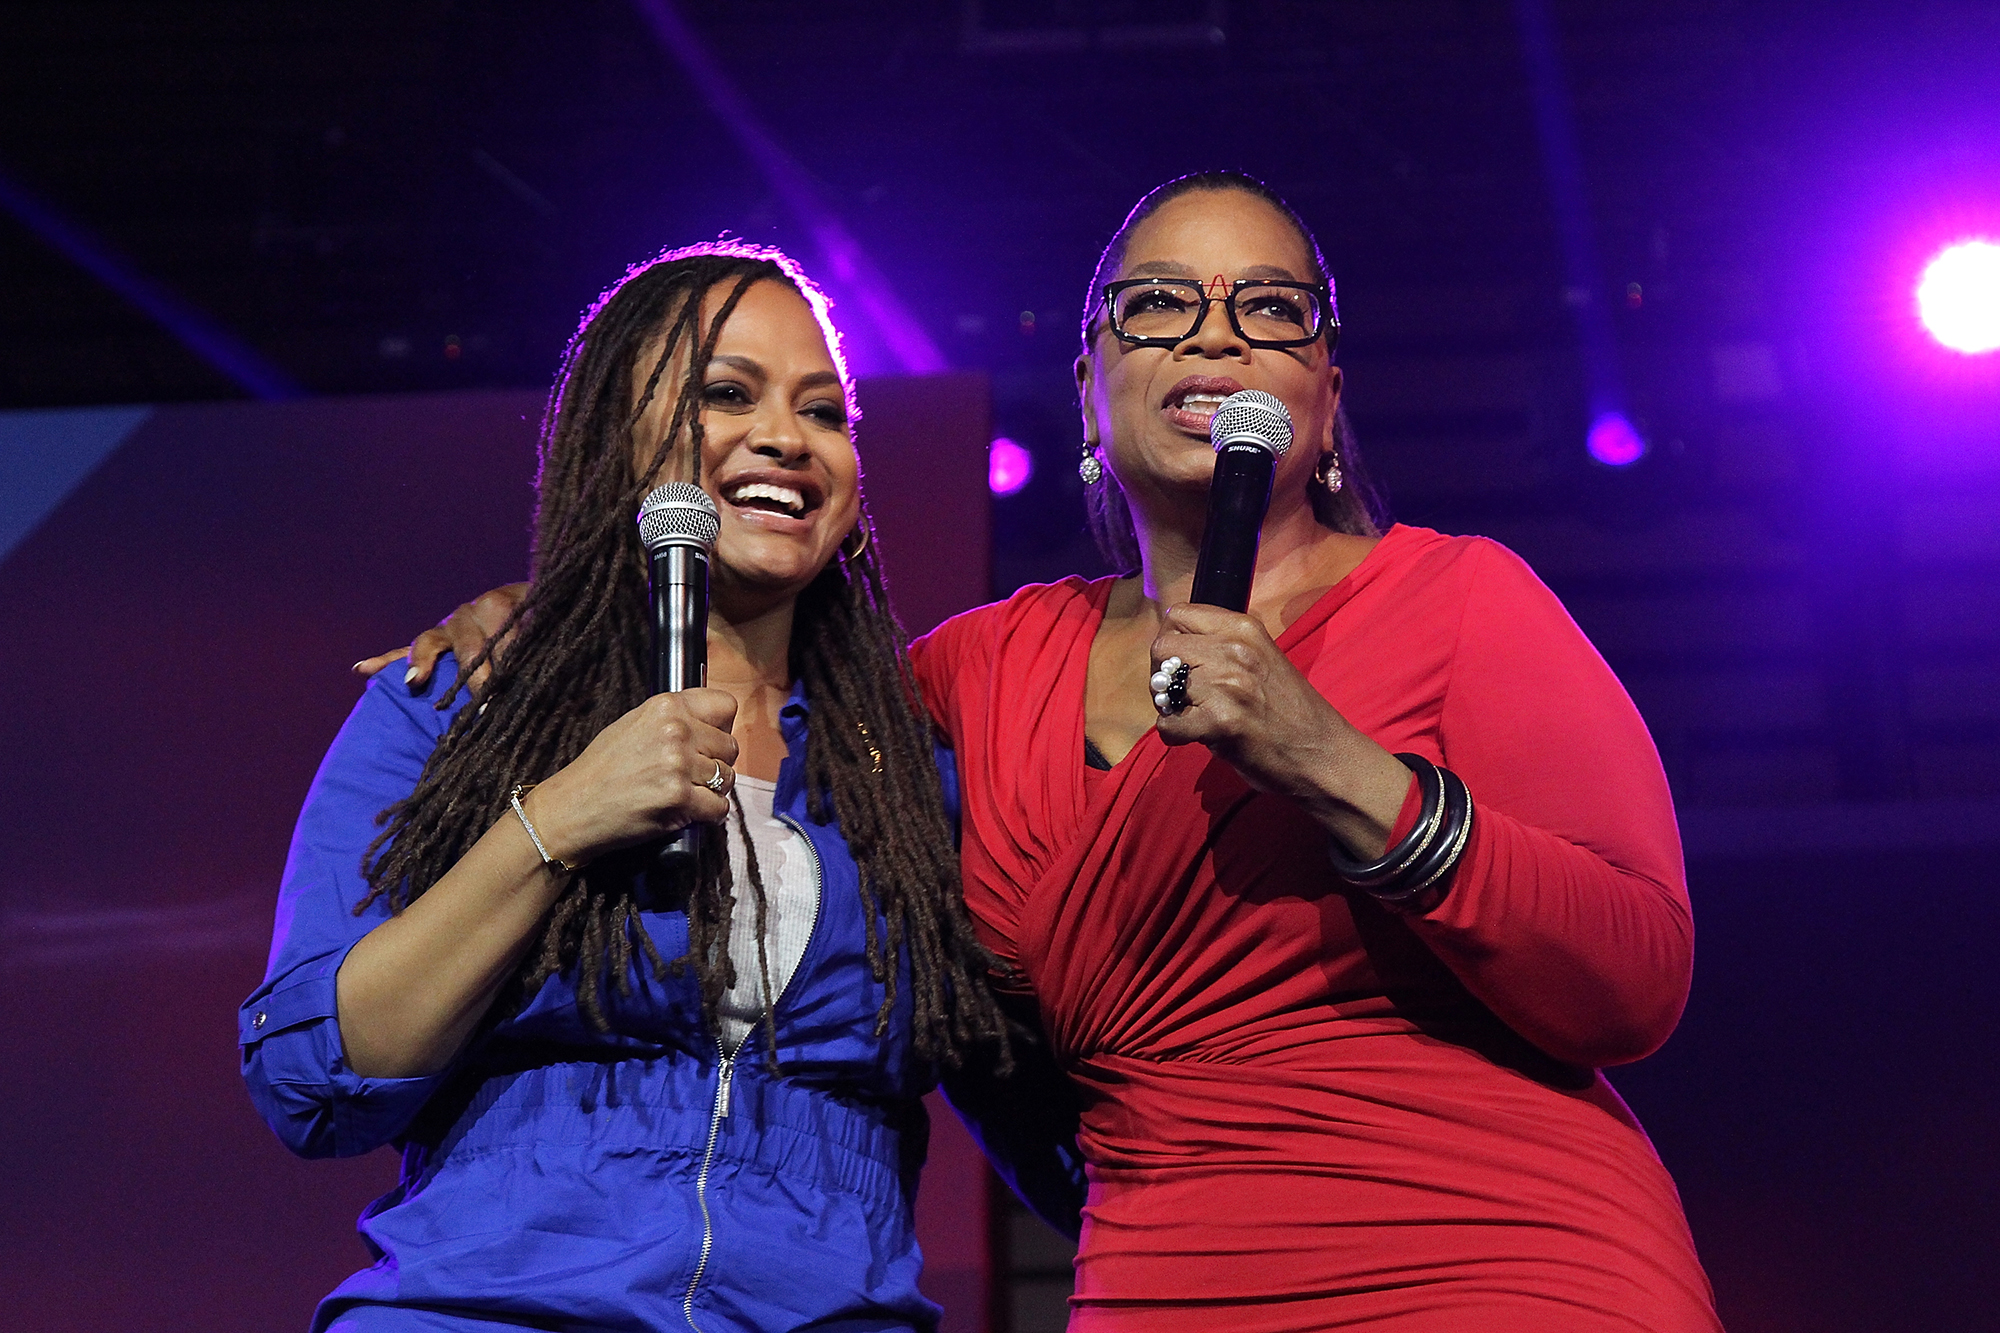 Ava DuVernay and Oprah Winfrey attend the 2016 Essence Festival - Day 2 at Ernest N. Morial Convention Center on July 1, 2016 in New Orleans, Louisiana.  (Photo by Bennett Raglin/WireImage) (Bennett Raglin&mdash;WireImage)